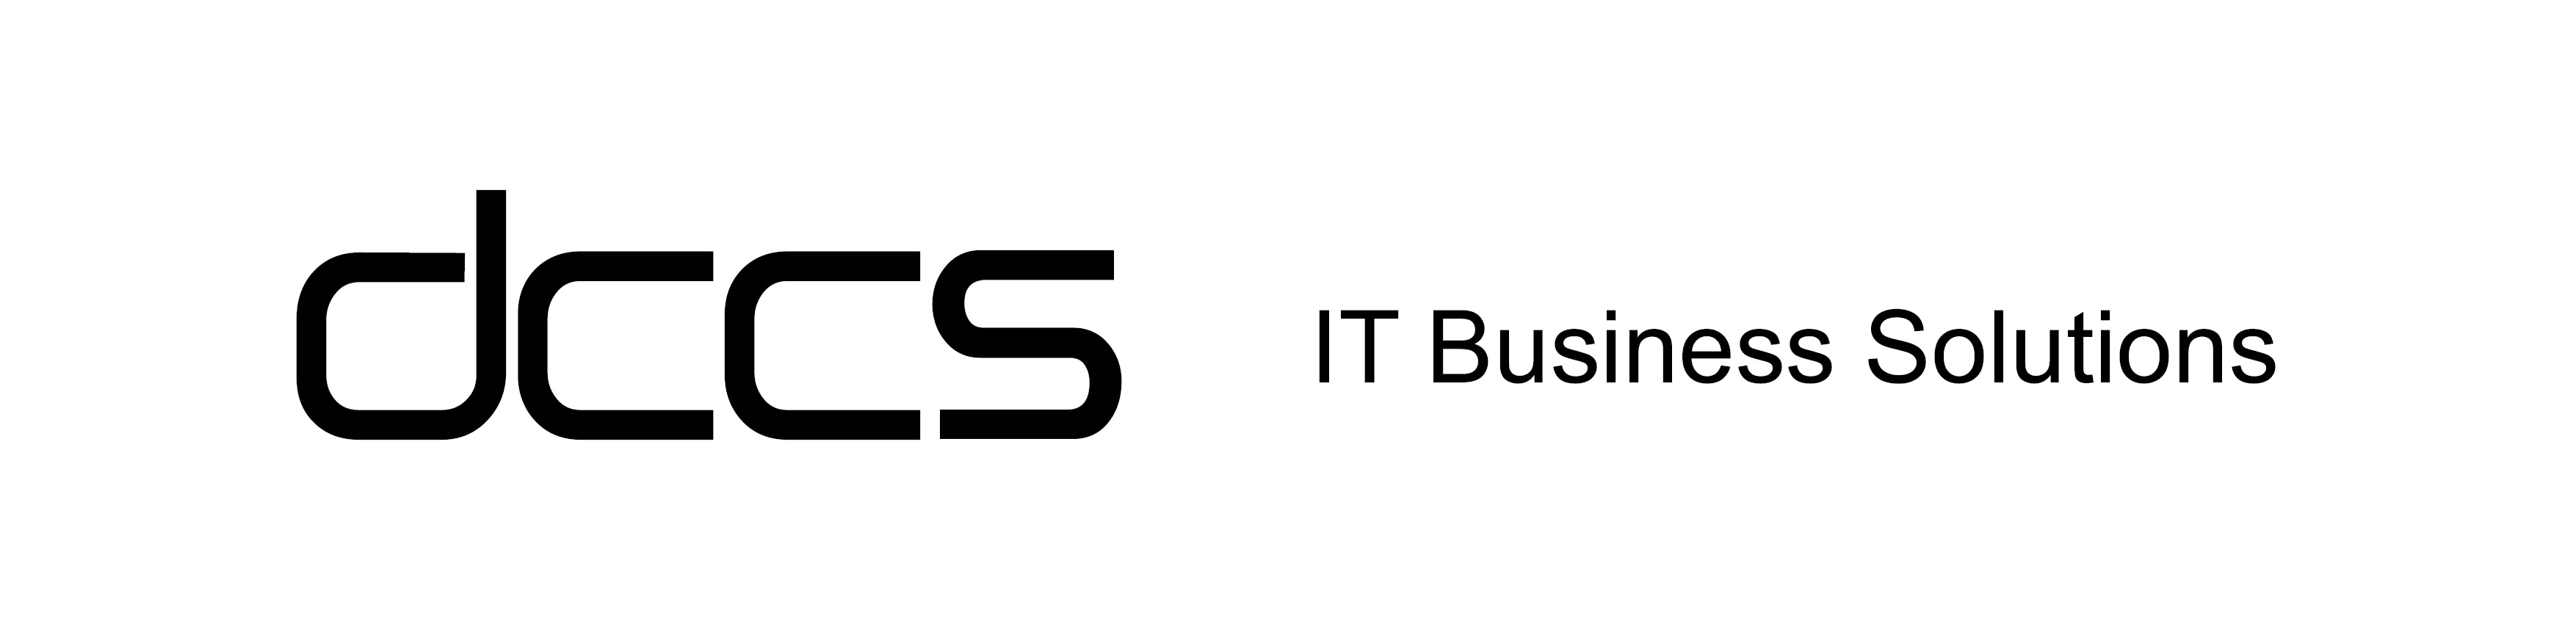 dccs_it_business_solutions_logo_mitweißundRahmen.jpg